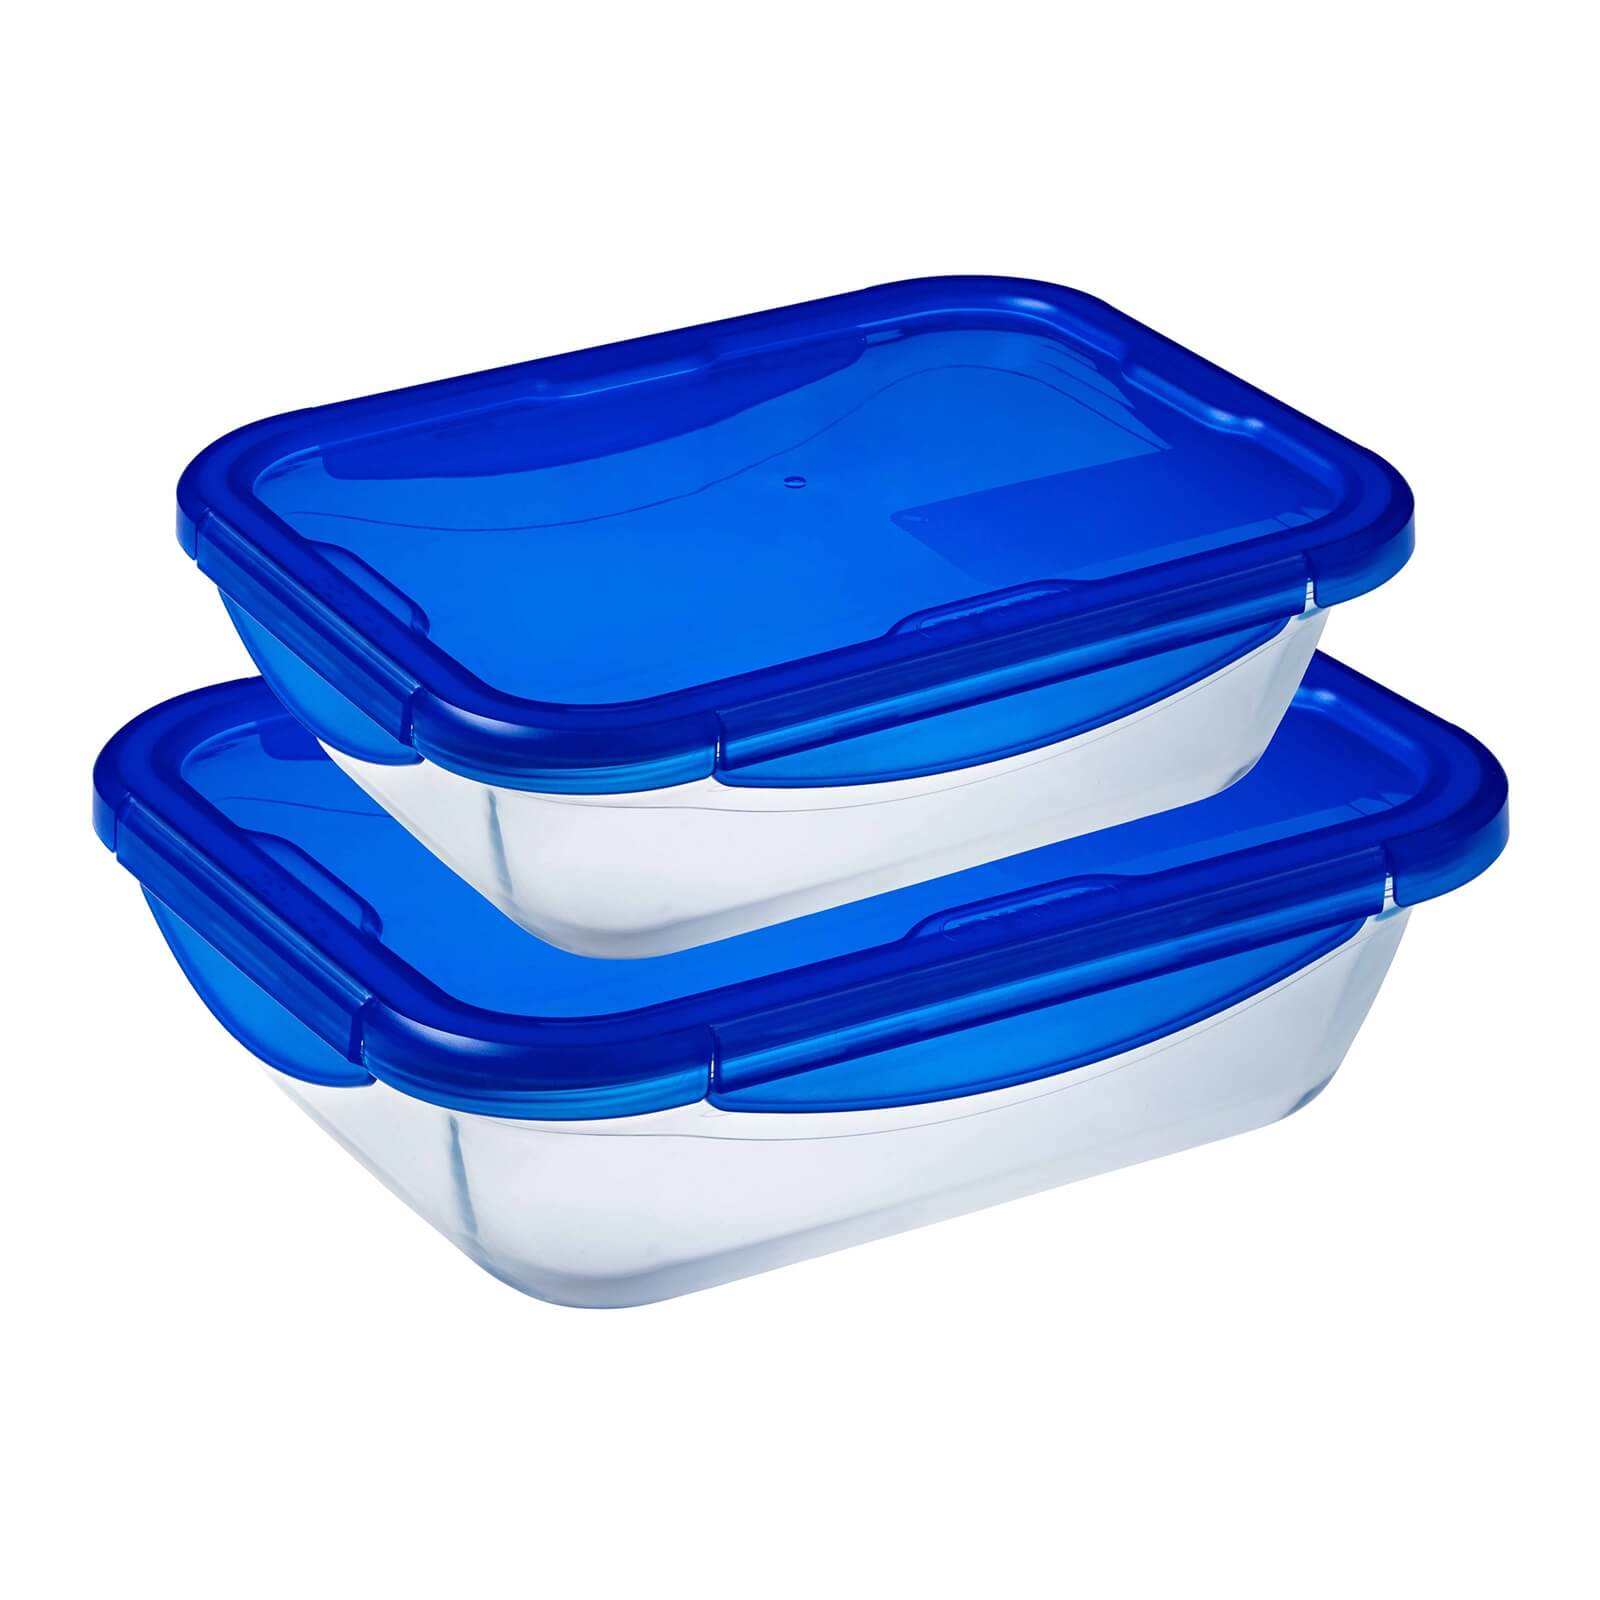 Photo of Pyrex Cook & Go 2 Piece Food Storage Set - Blue